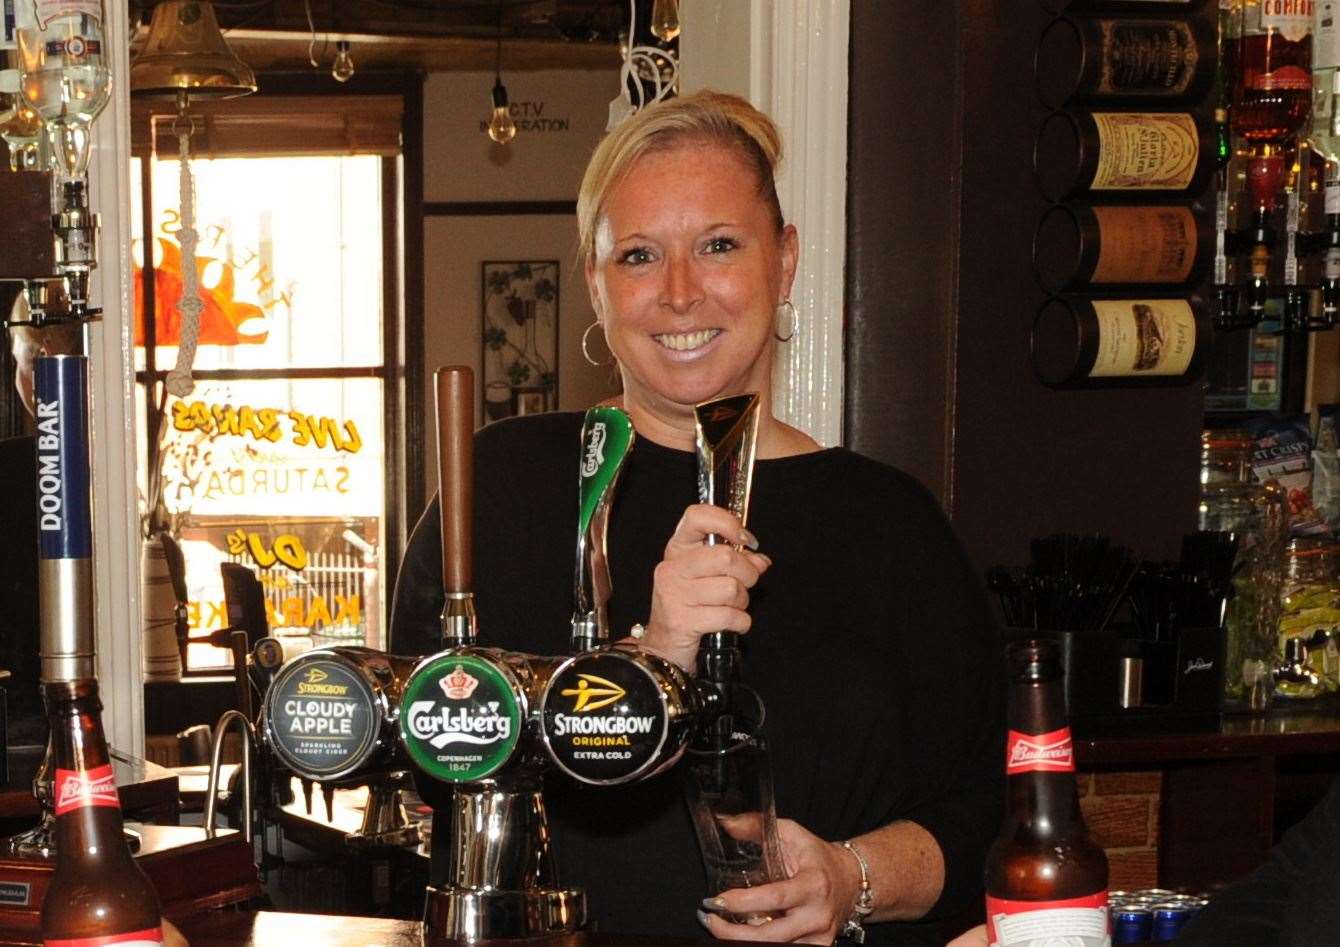 Kelly Earle runs the Rising Sun pub in Rochester